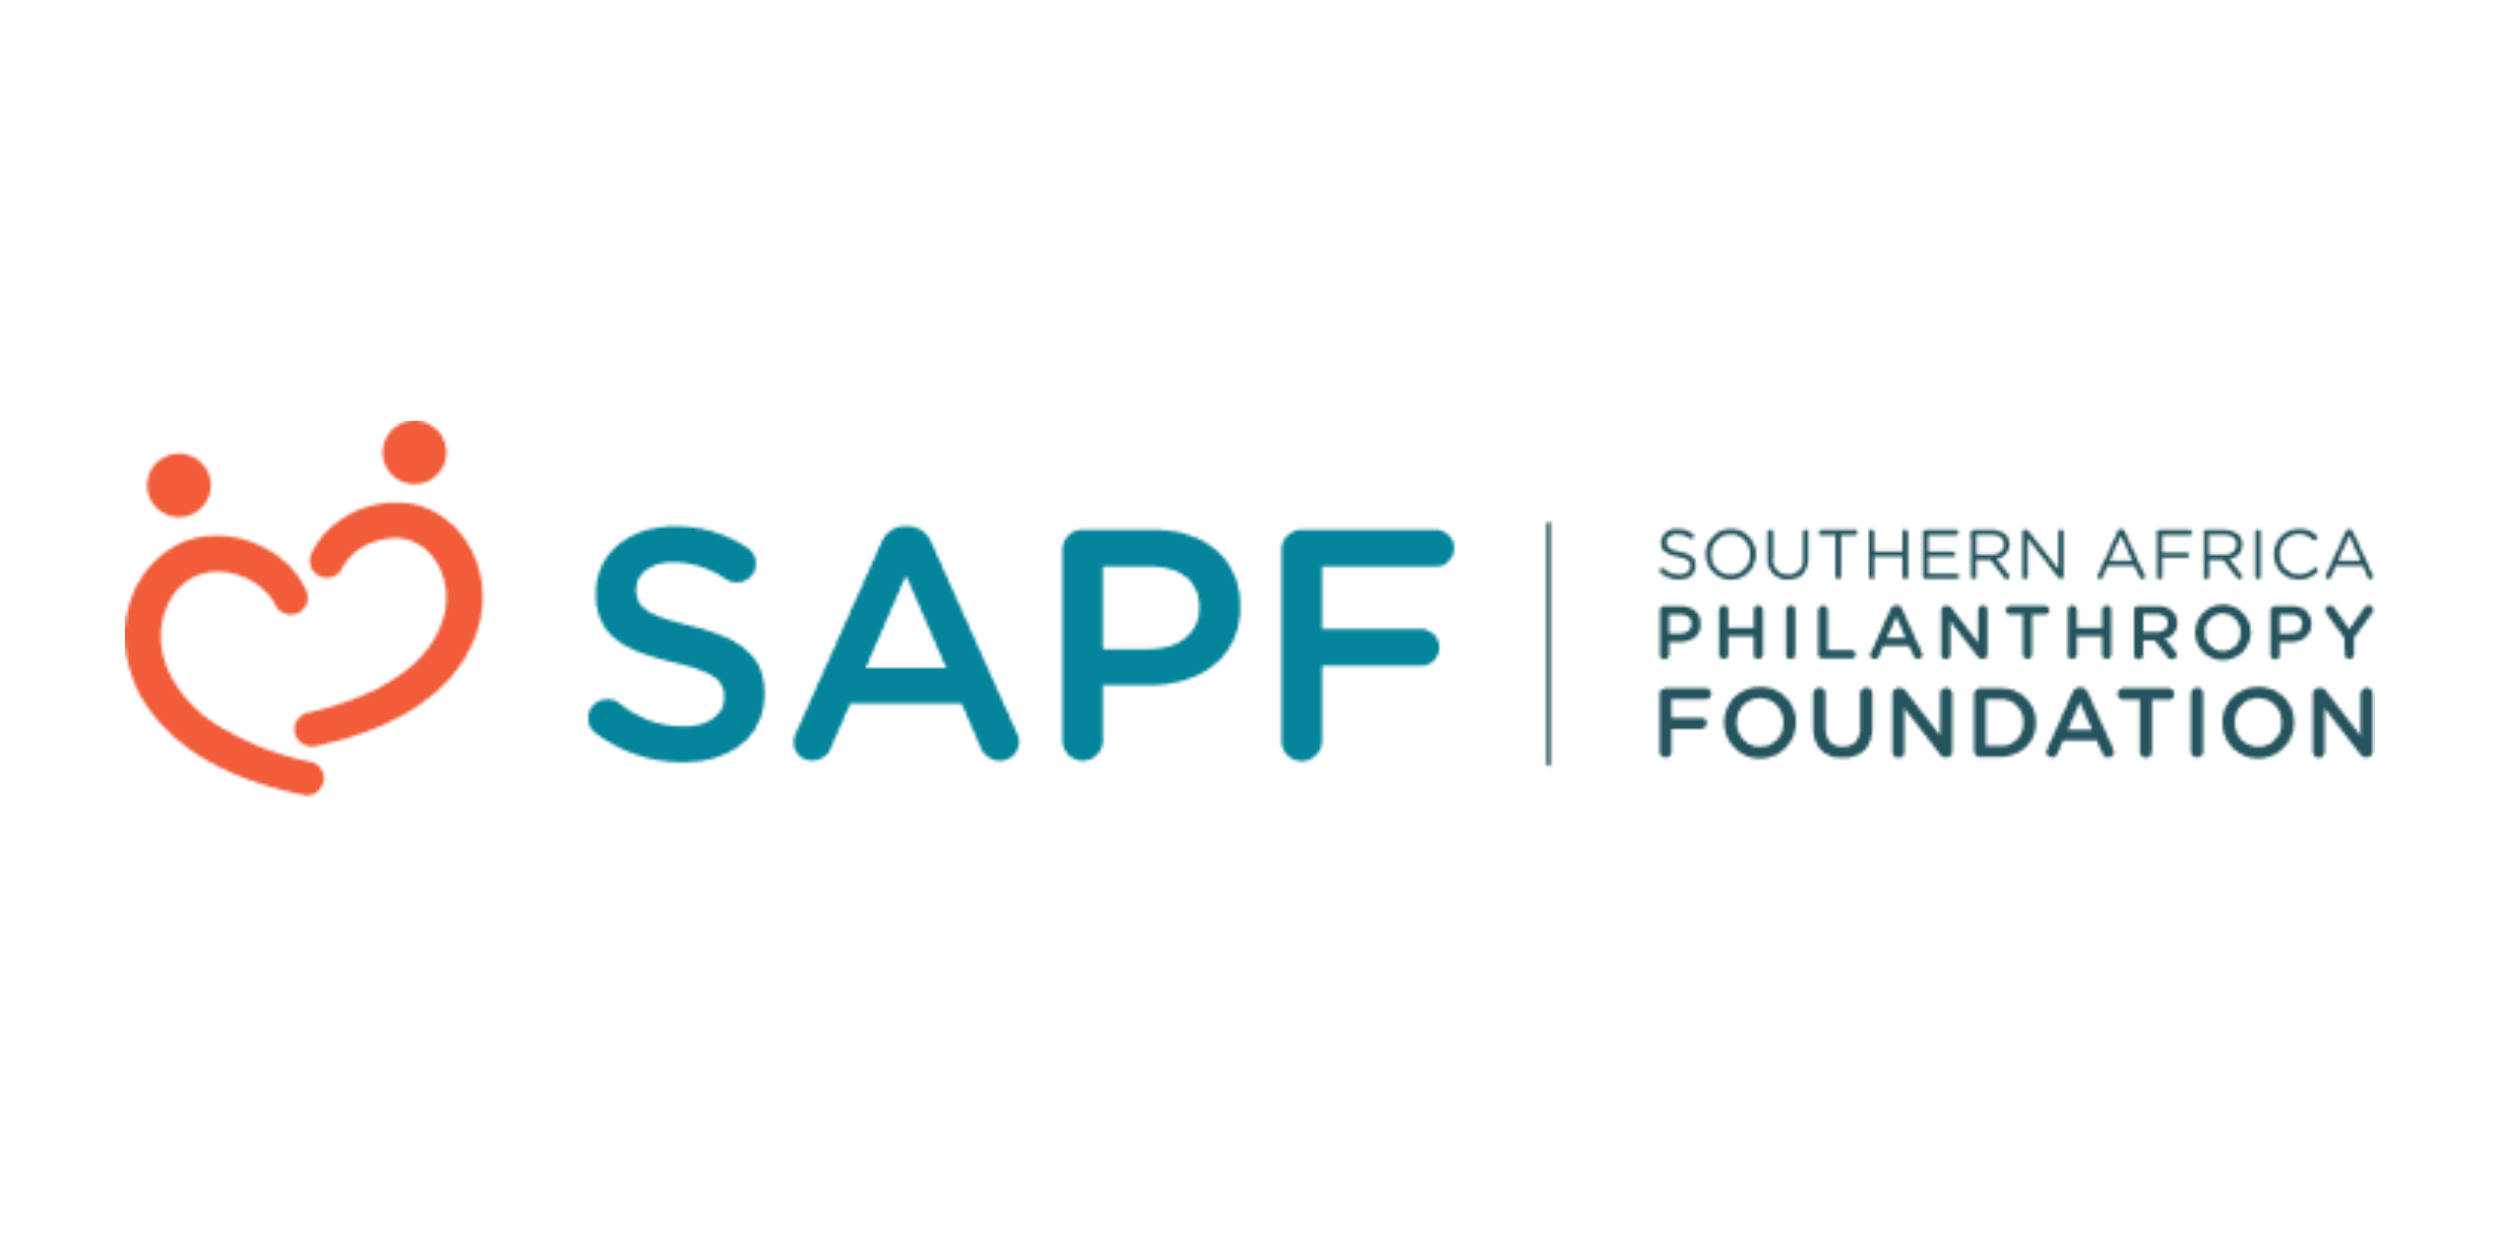 Southern Africa Philanthropy Foundation